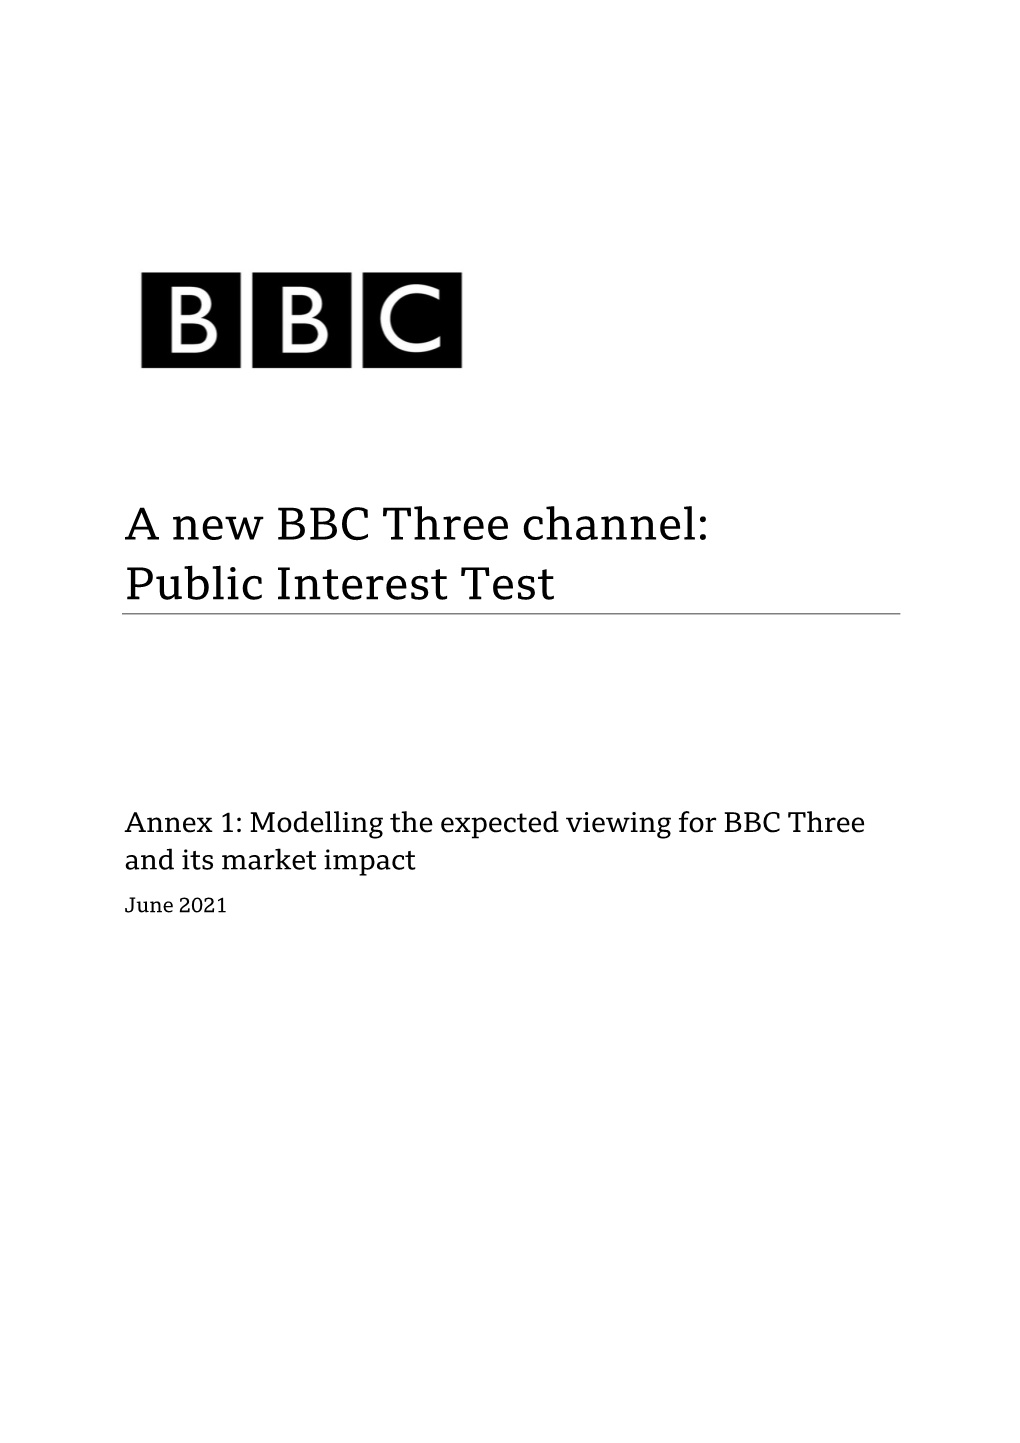 BBC Three PIT Modelling Annex Final